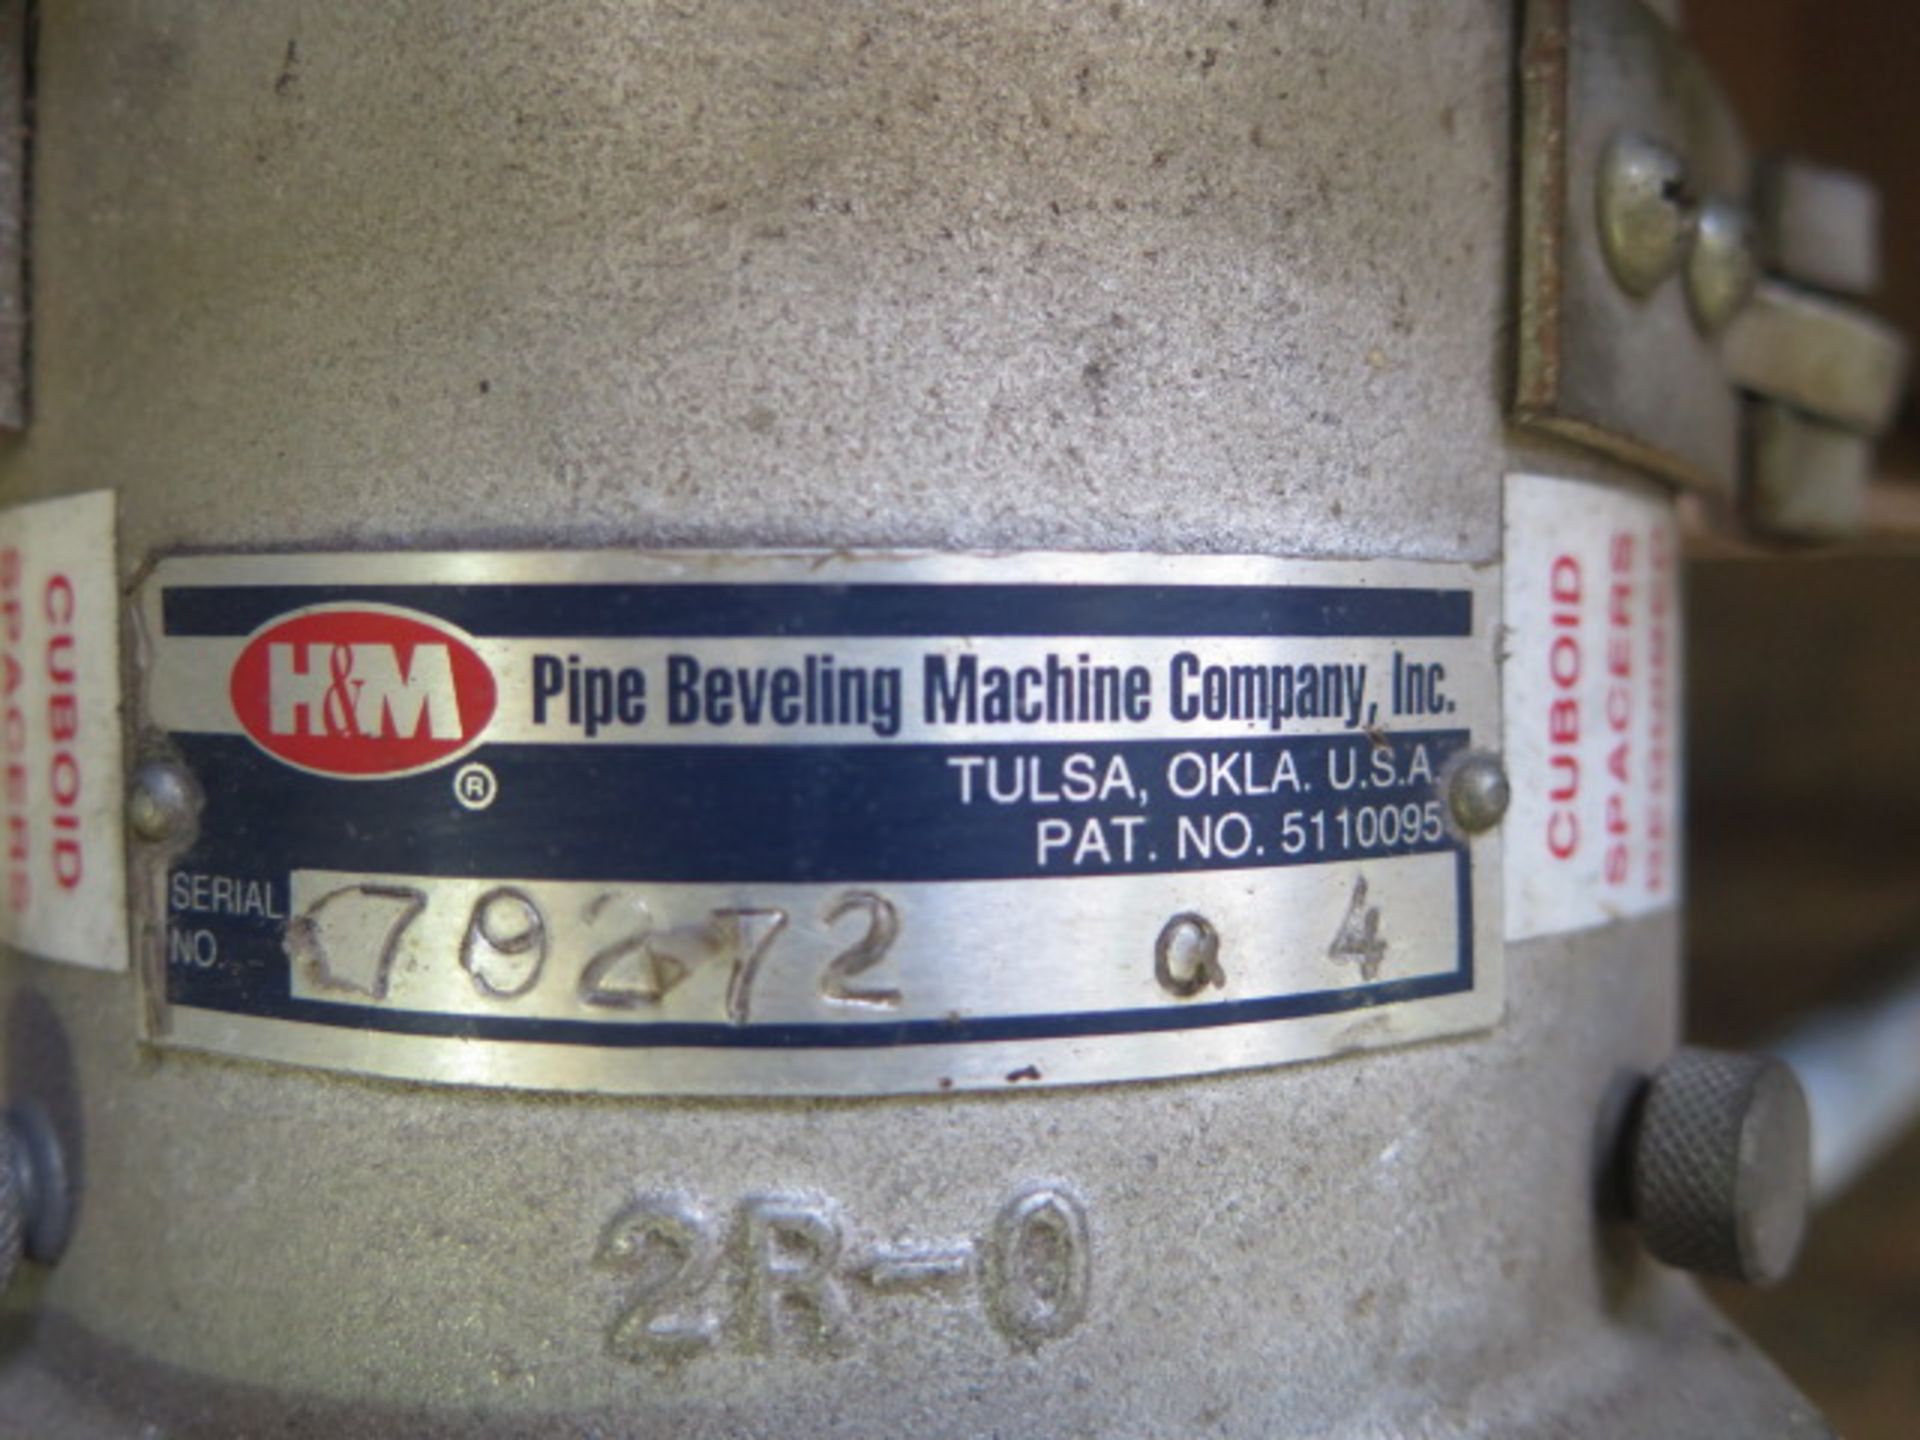 H&M mdl. 2R-0 Pipe Beveler - Image 4 of 4